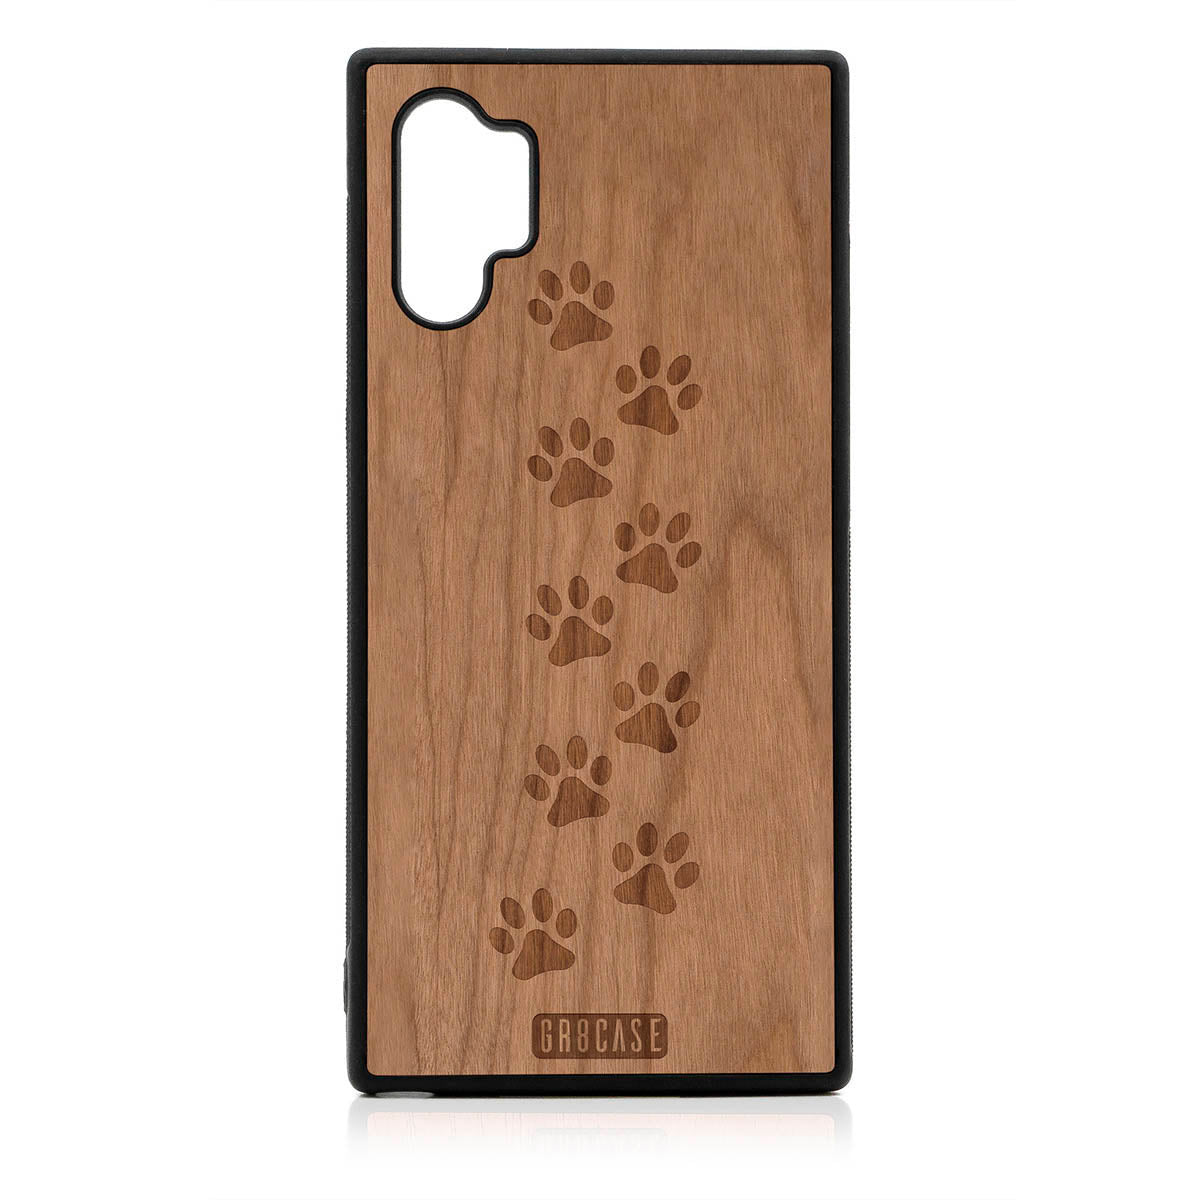 Paw Prints Design Wood Case Samsung Galaxy Note 10 Plus by GR8CASE